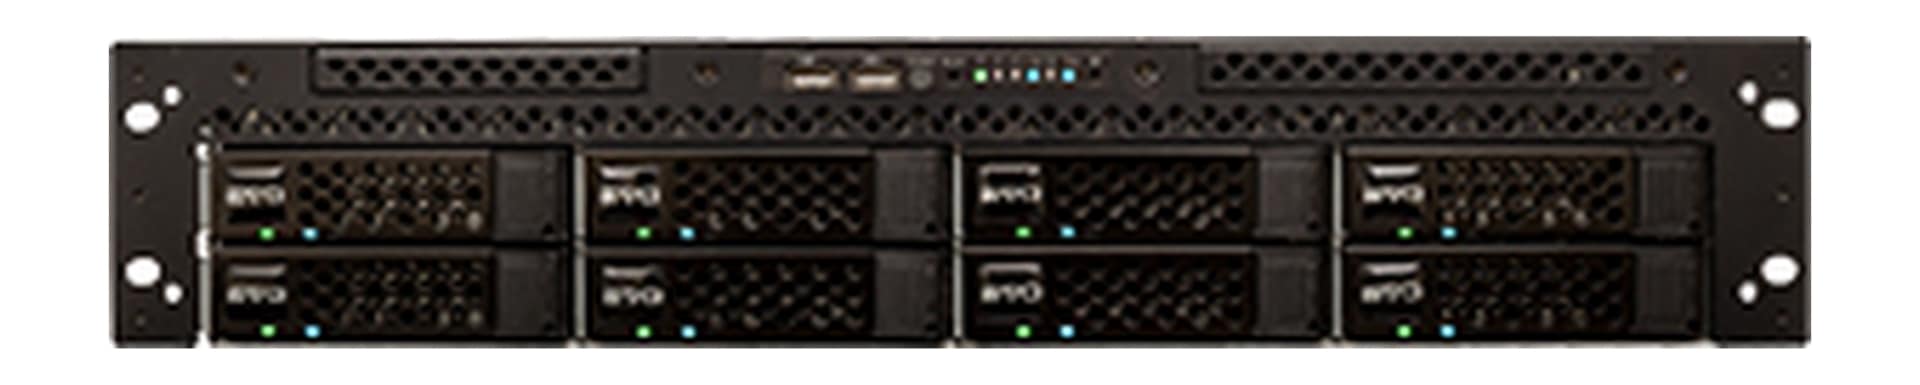 SNS EVO 2U 8 Bay Shared Storage Server with 15.2TB Raw Capacity Solid State Drive